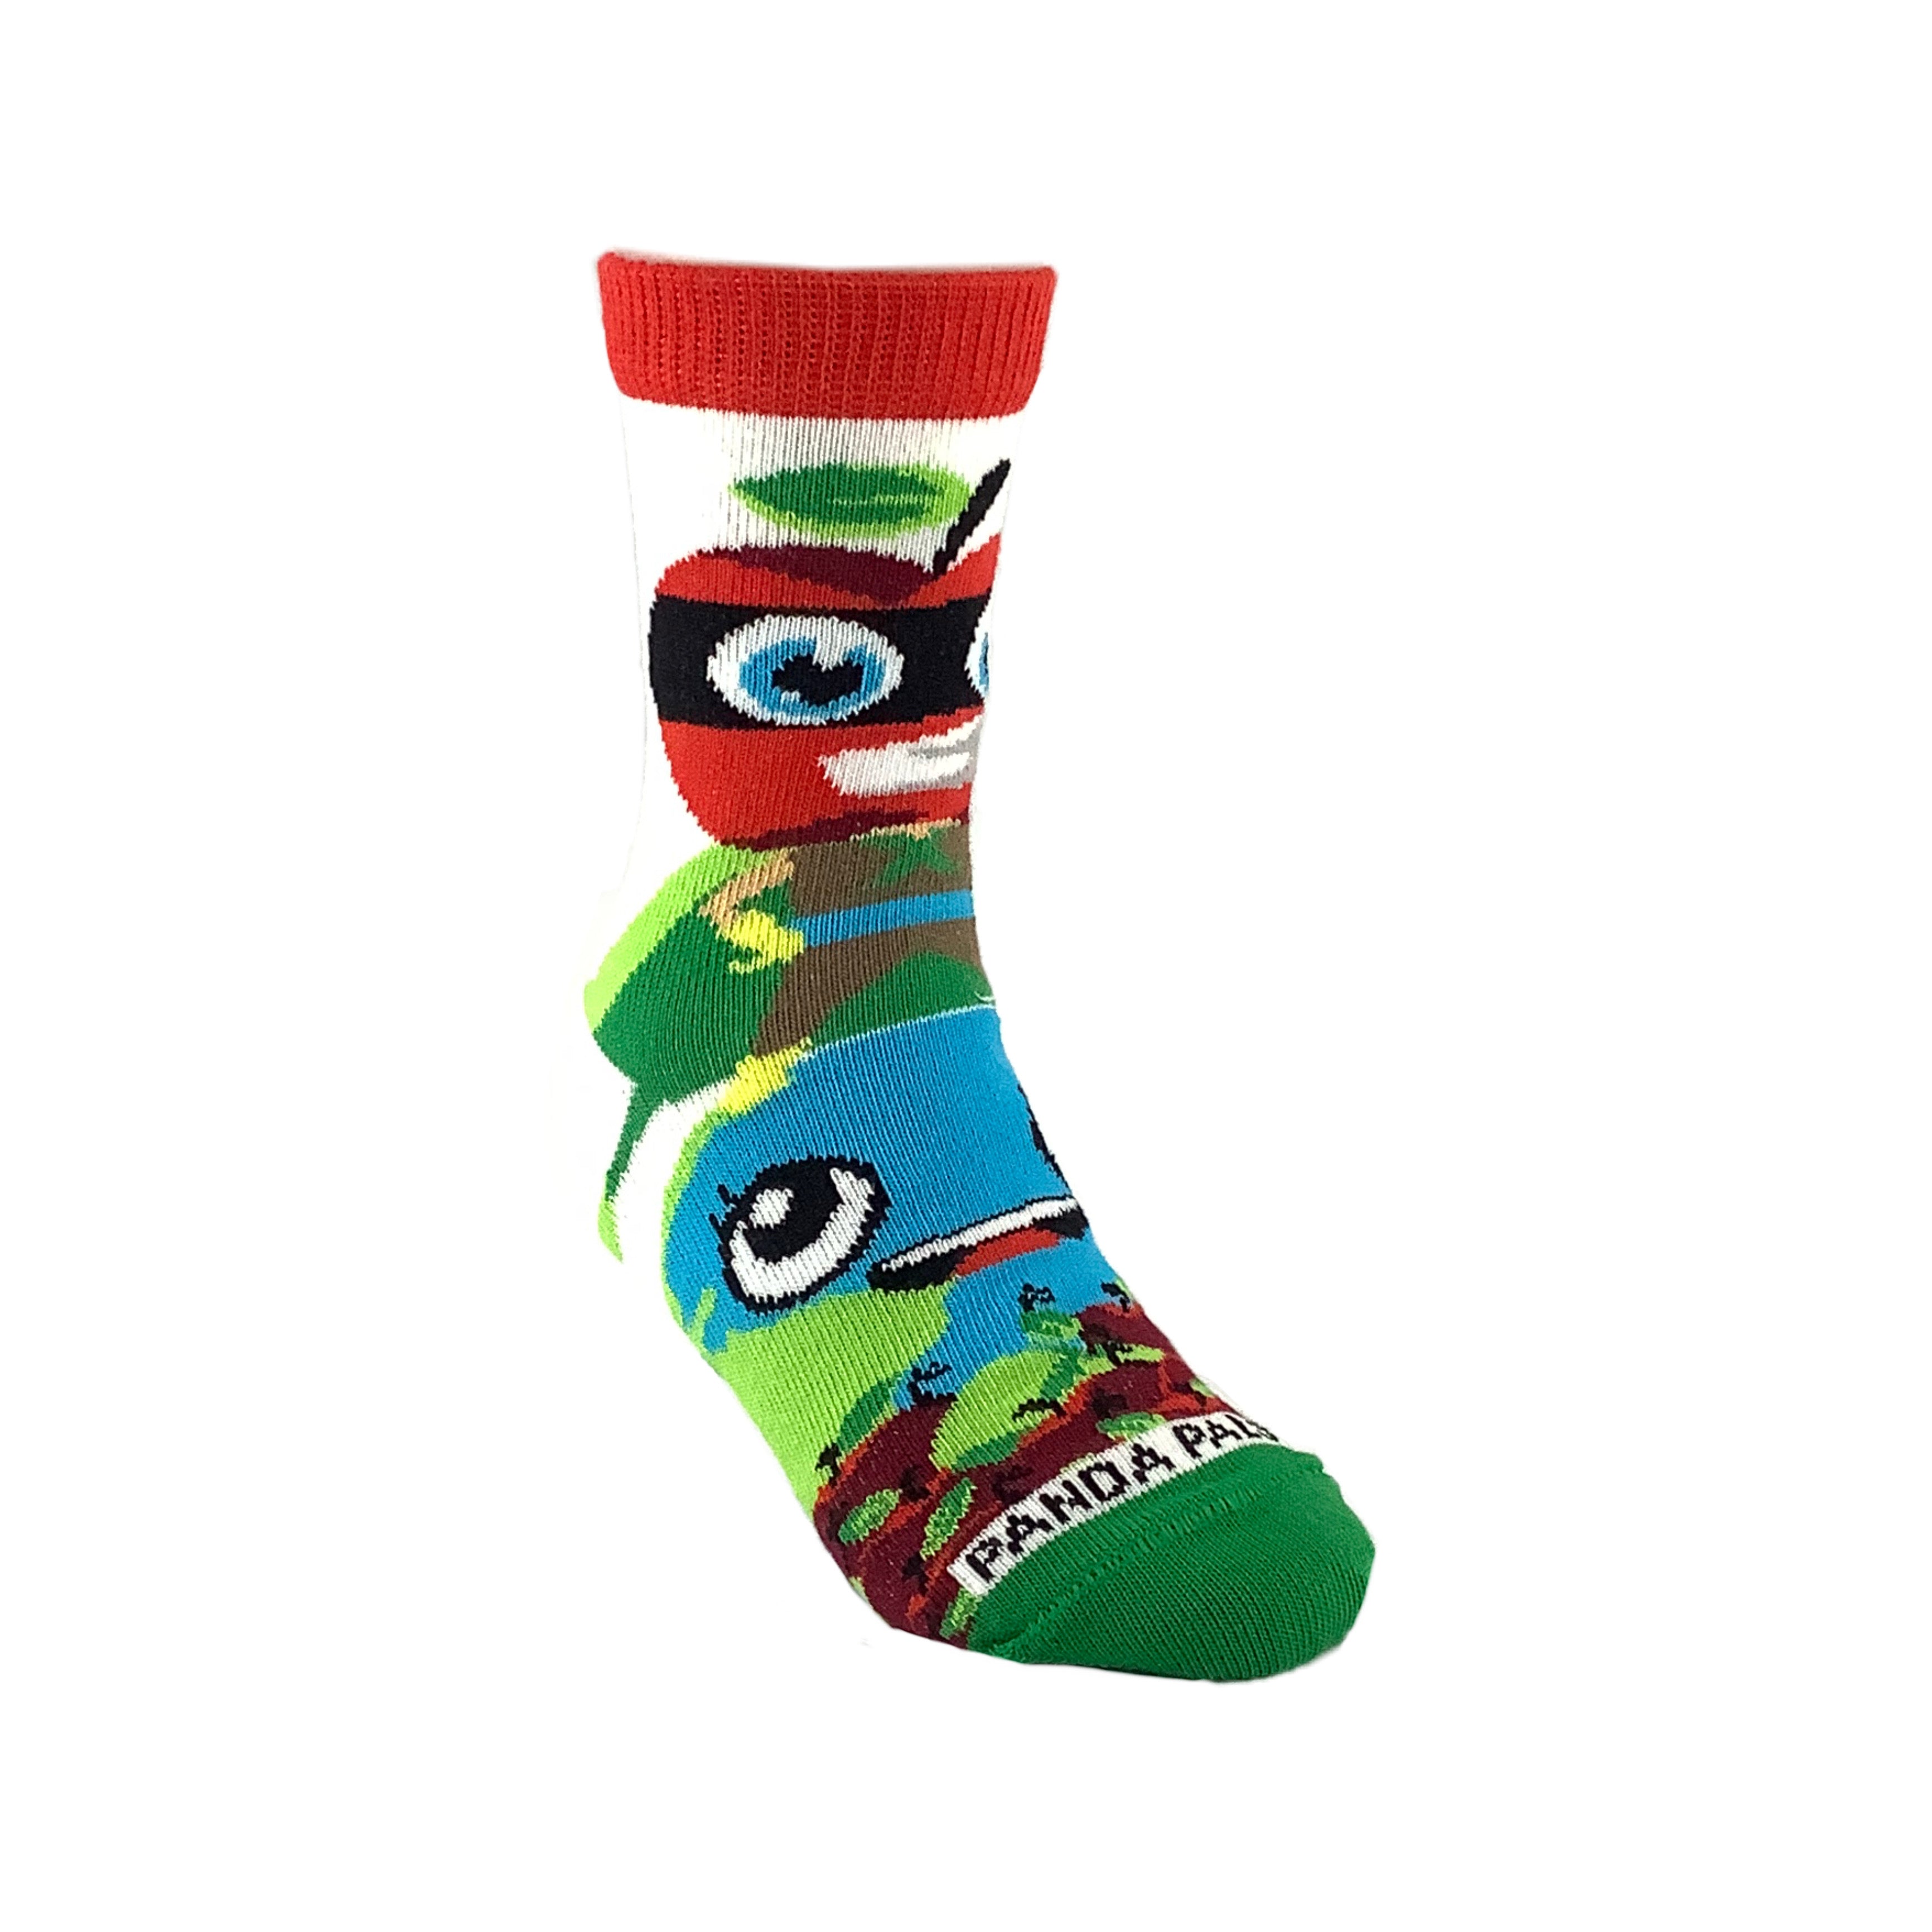 Apple Super Hero Socks from the Sock Panda (Ages 3-7)